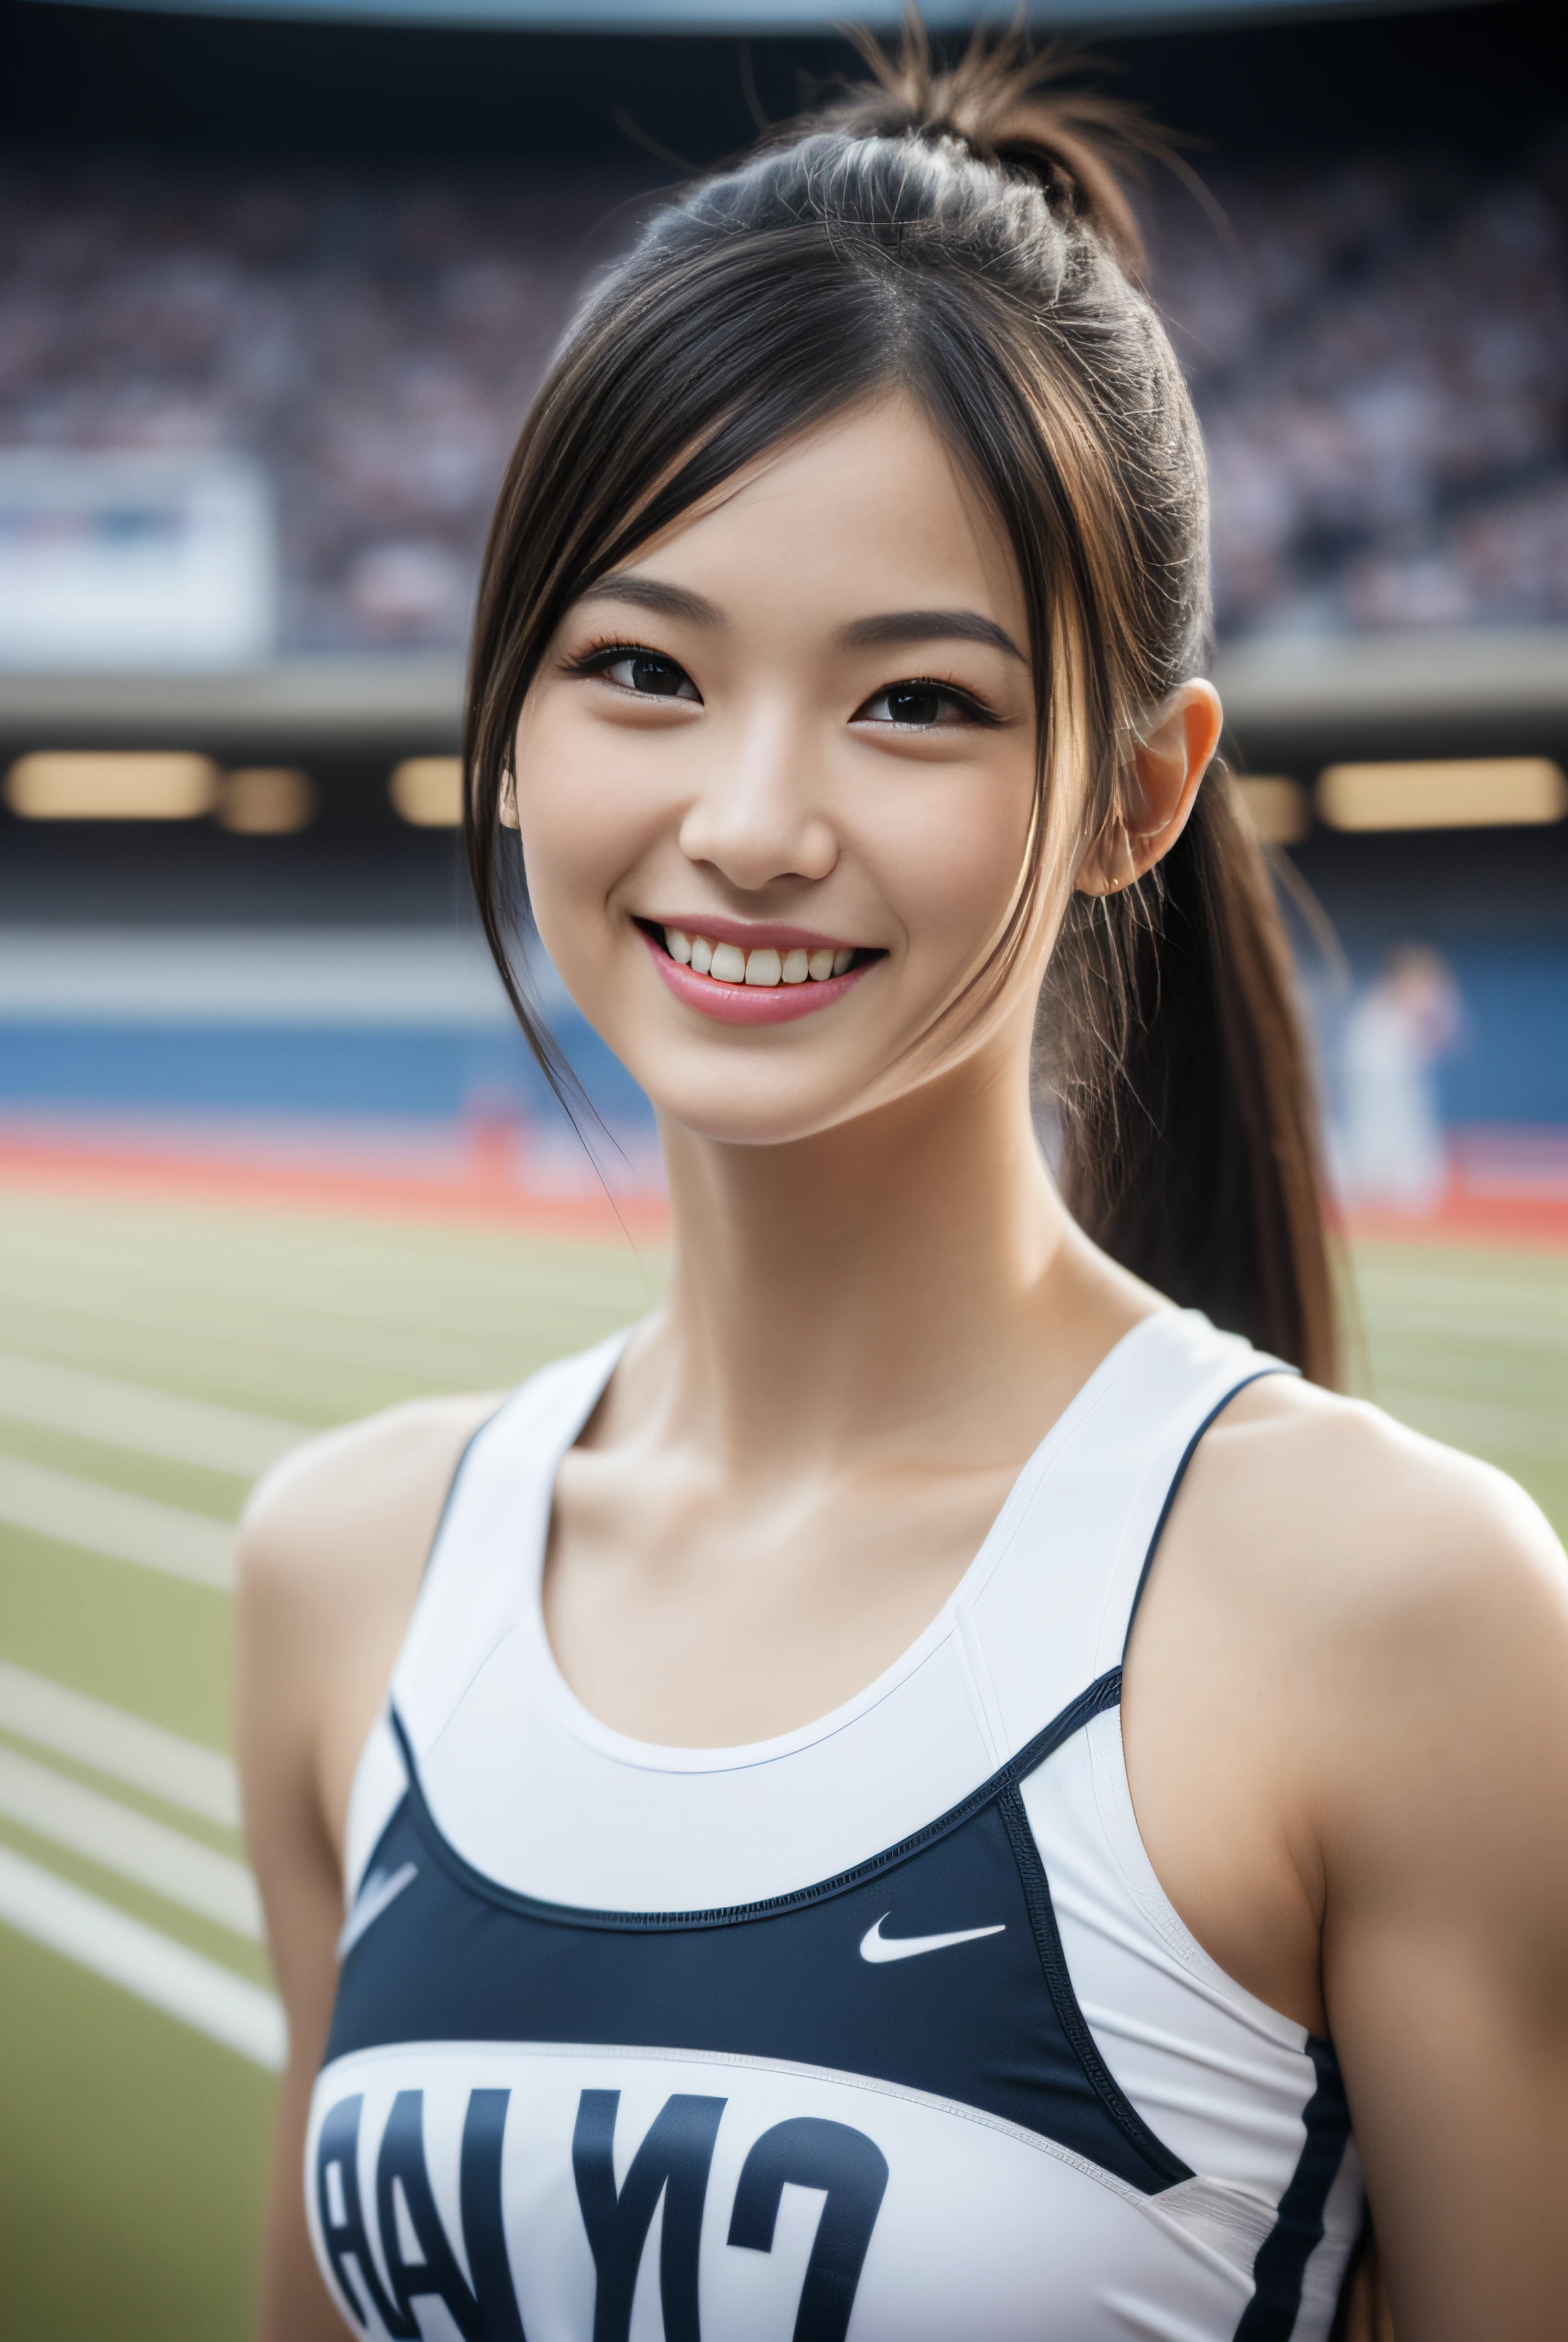 Full Bodyesbian、japanese Beauty Girl、two Shot、track And Field Uniform、shoulder